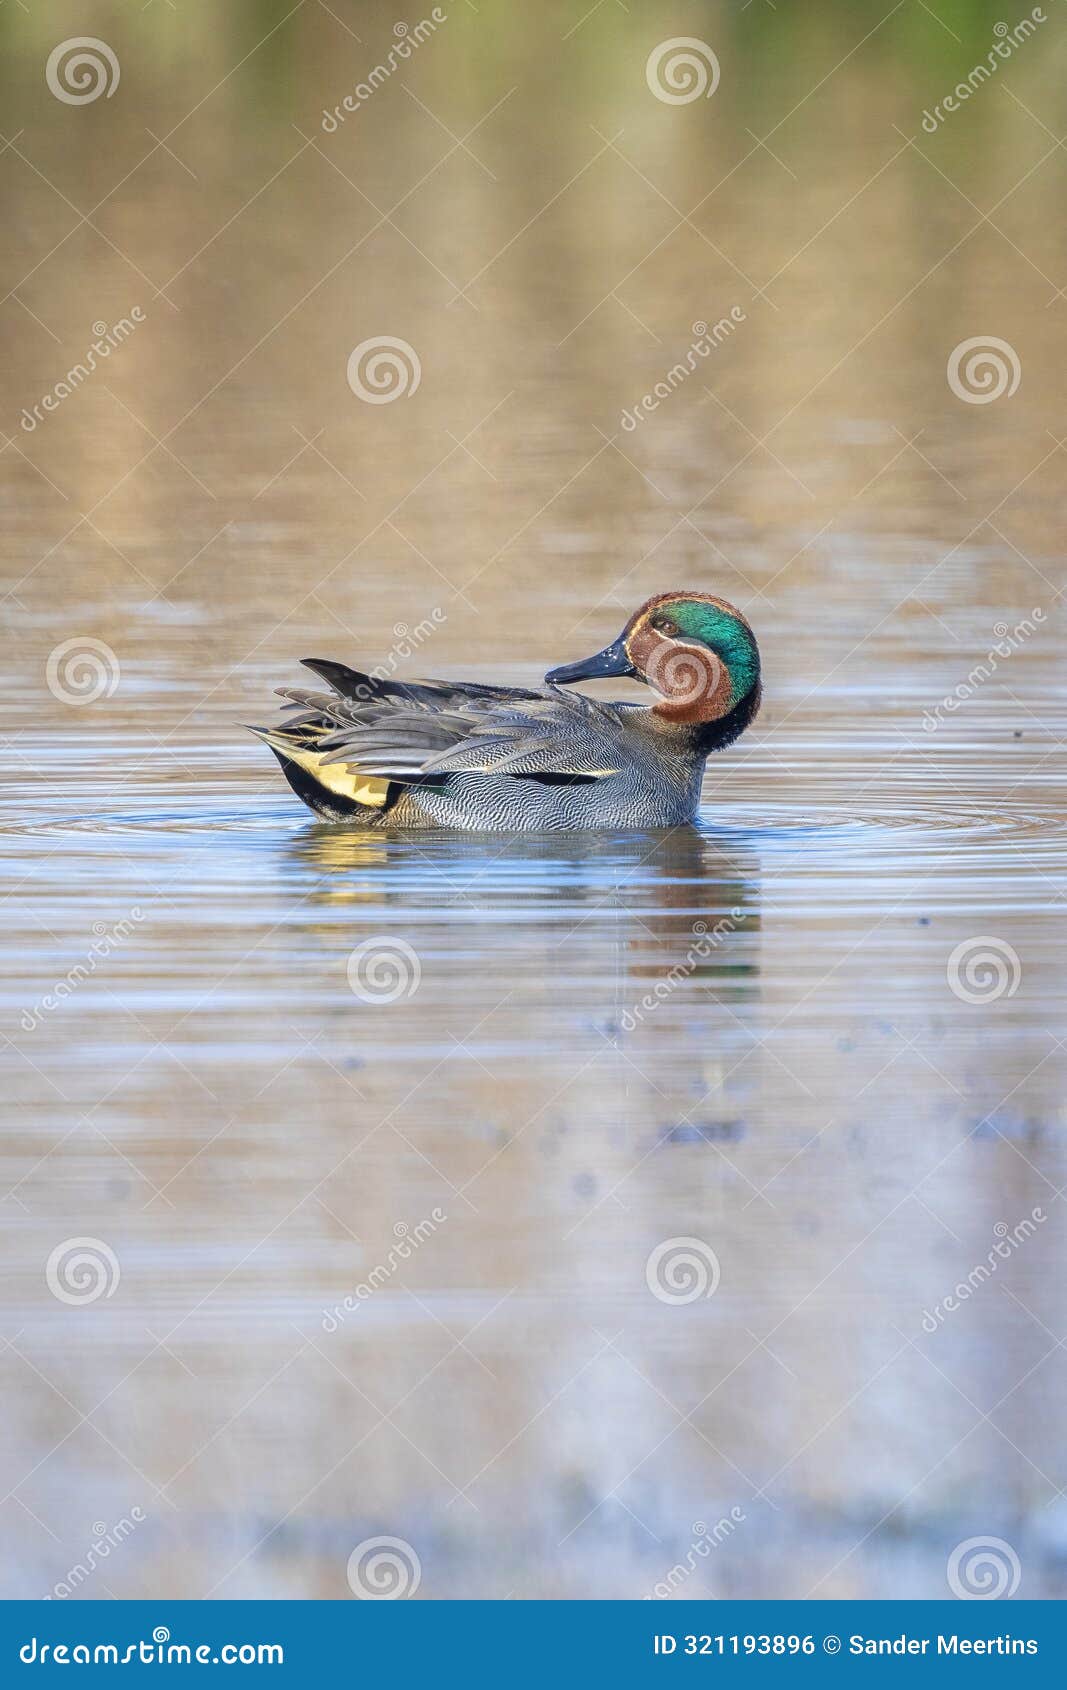 swimming male eurasian teal, anas crecca, duck portrait